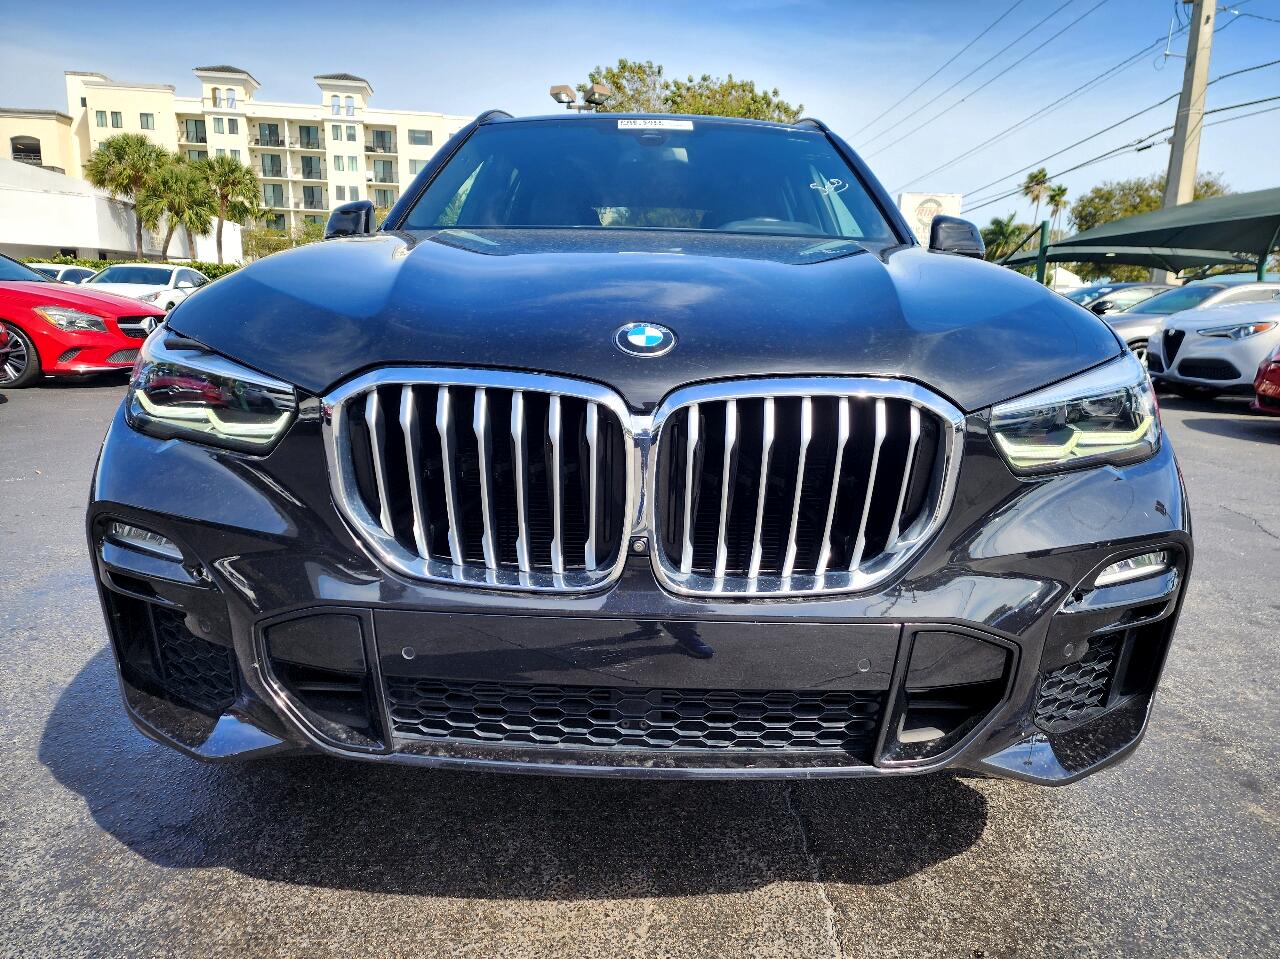 2021 BMW X5 SUV / Crossover - $44,999